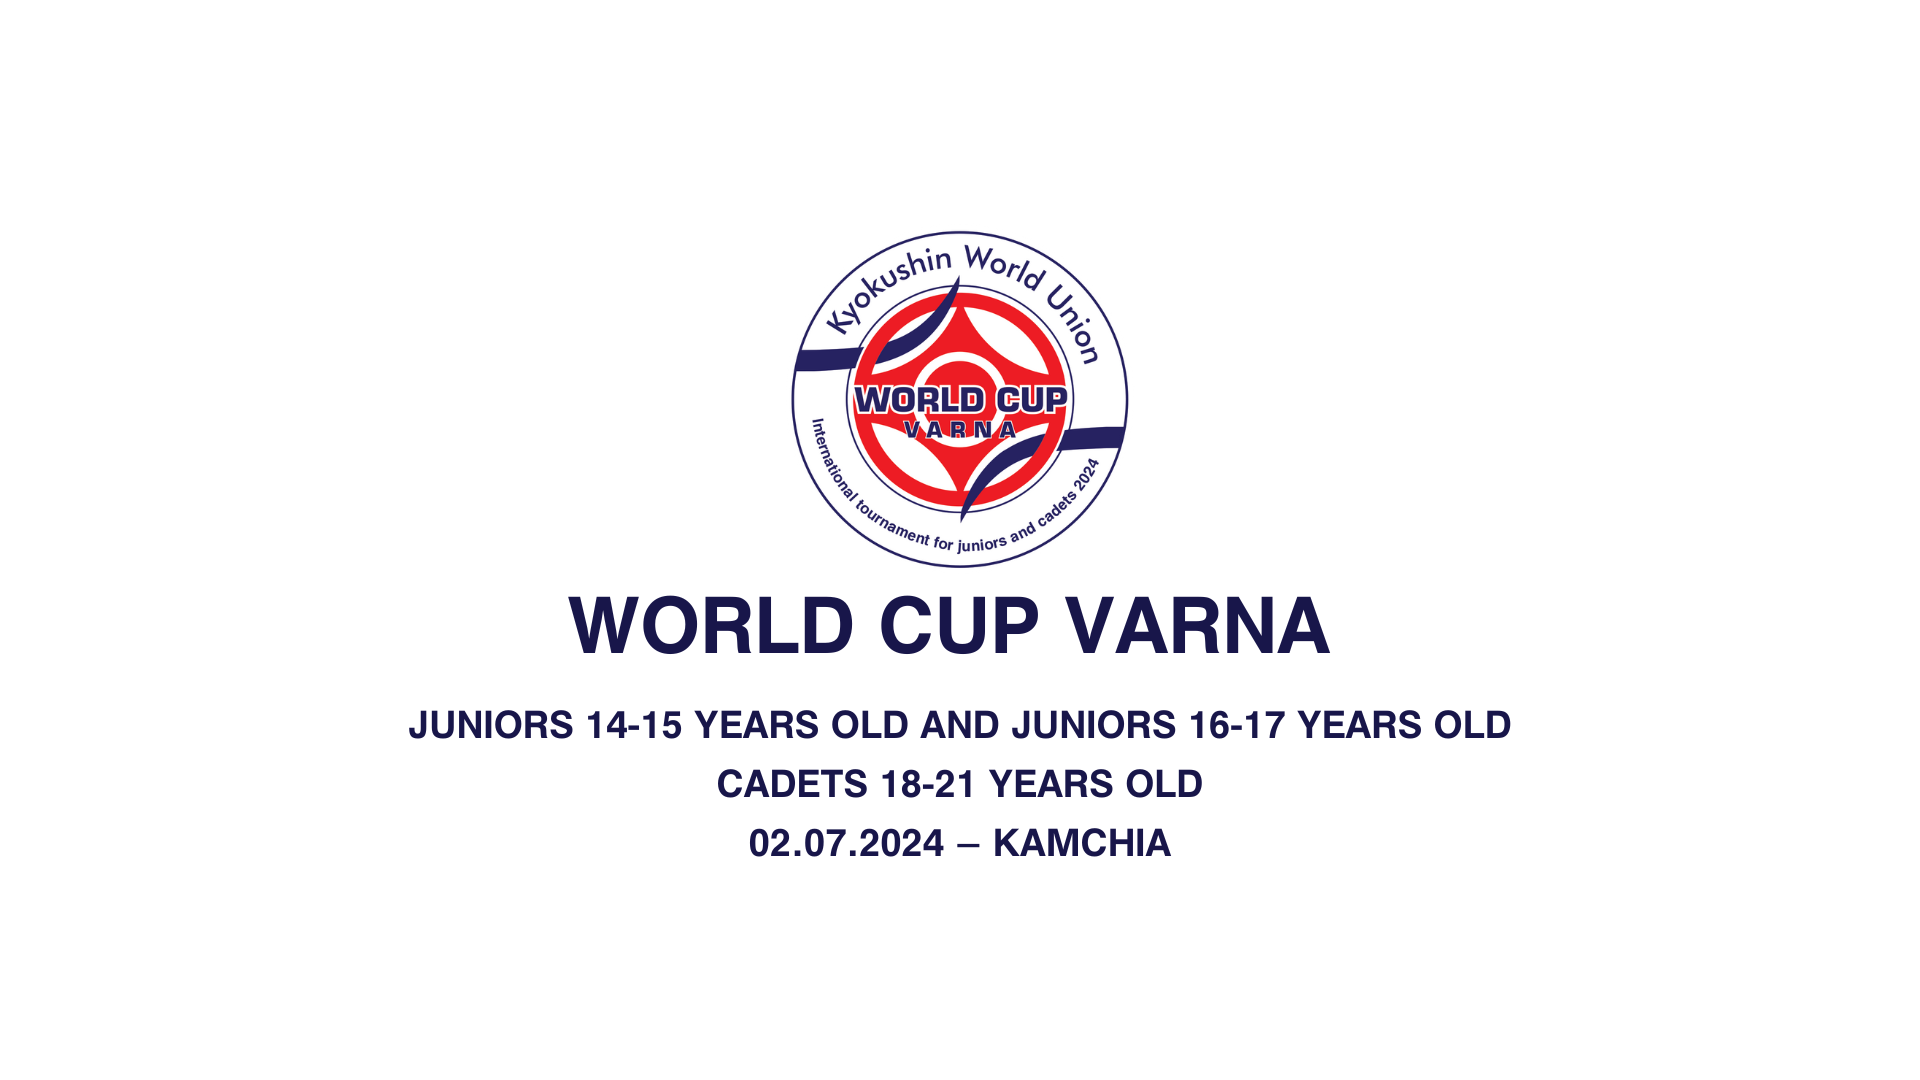 World Cup Varna 2024 for juniors 14-15 yo, juniors 16-17 yo and cadets 18-21 yo